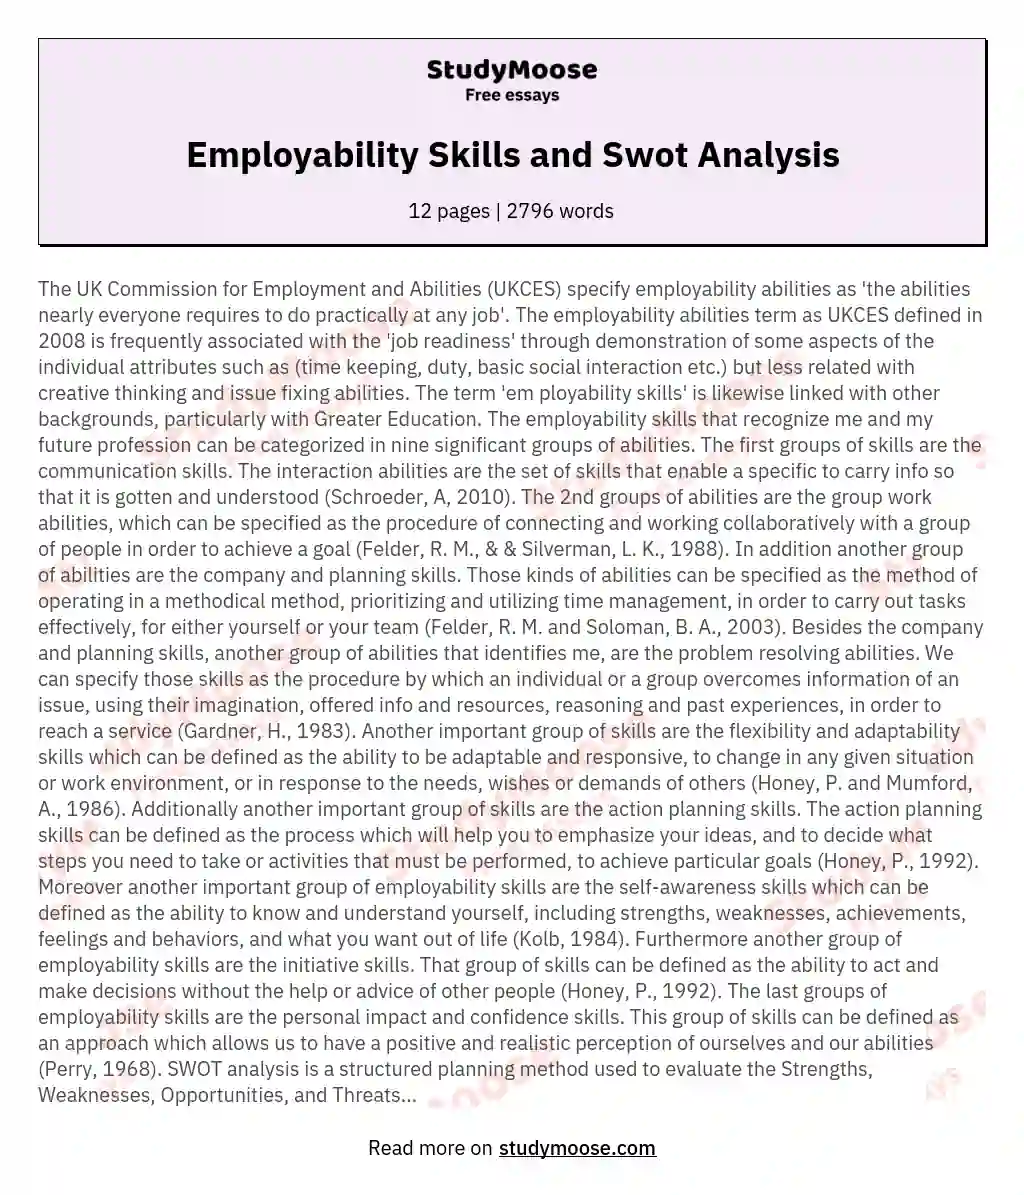 Employability Skills and Swot Analysis